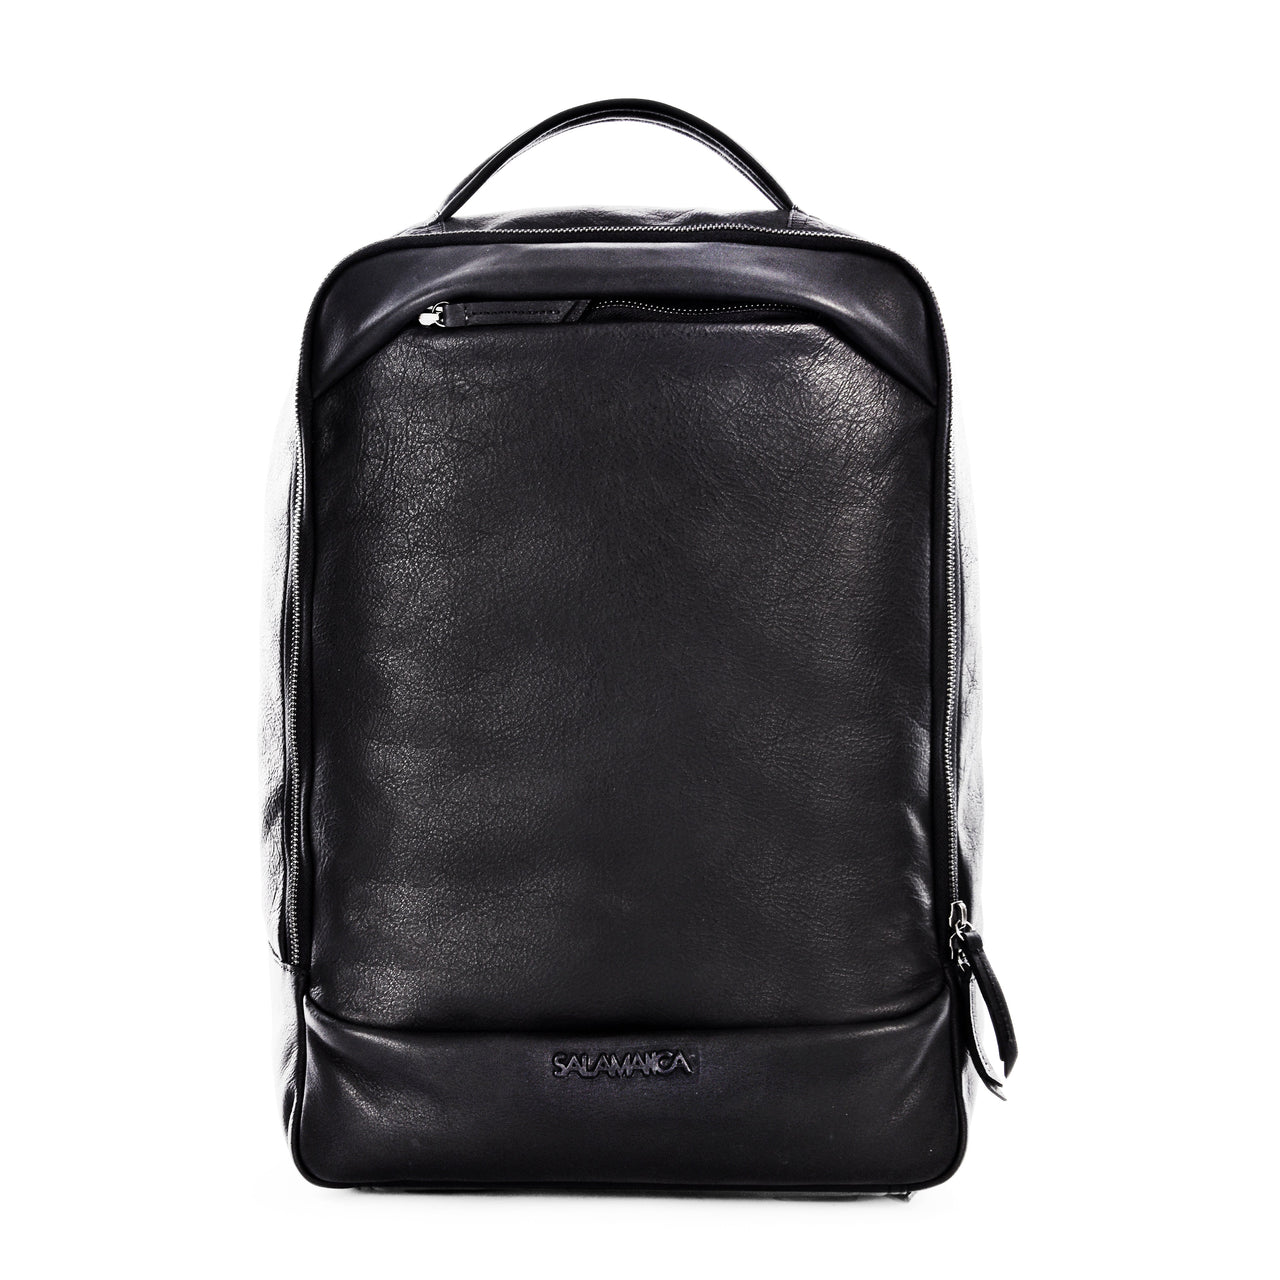 Velocity Backpack - Verico Black - Backpacks